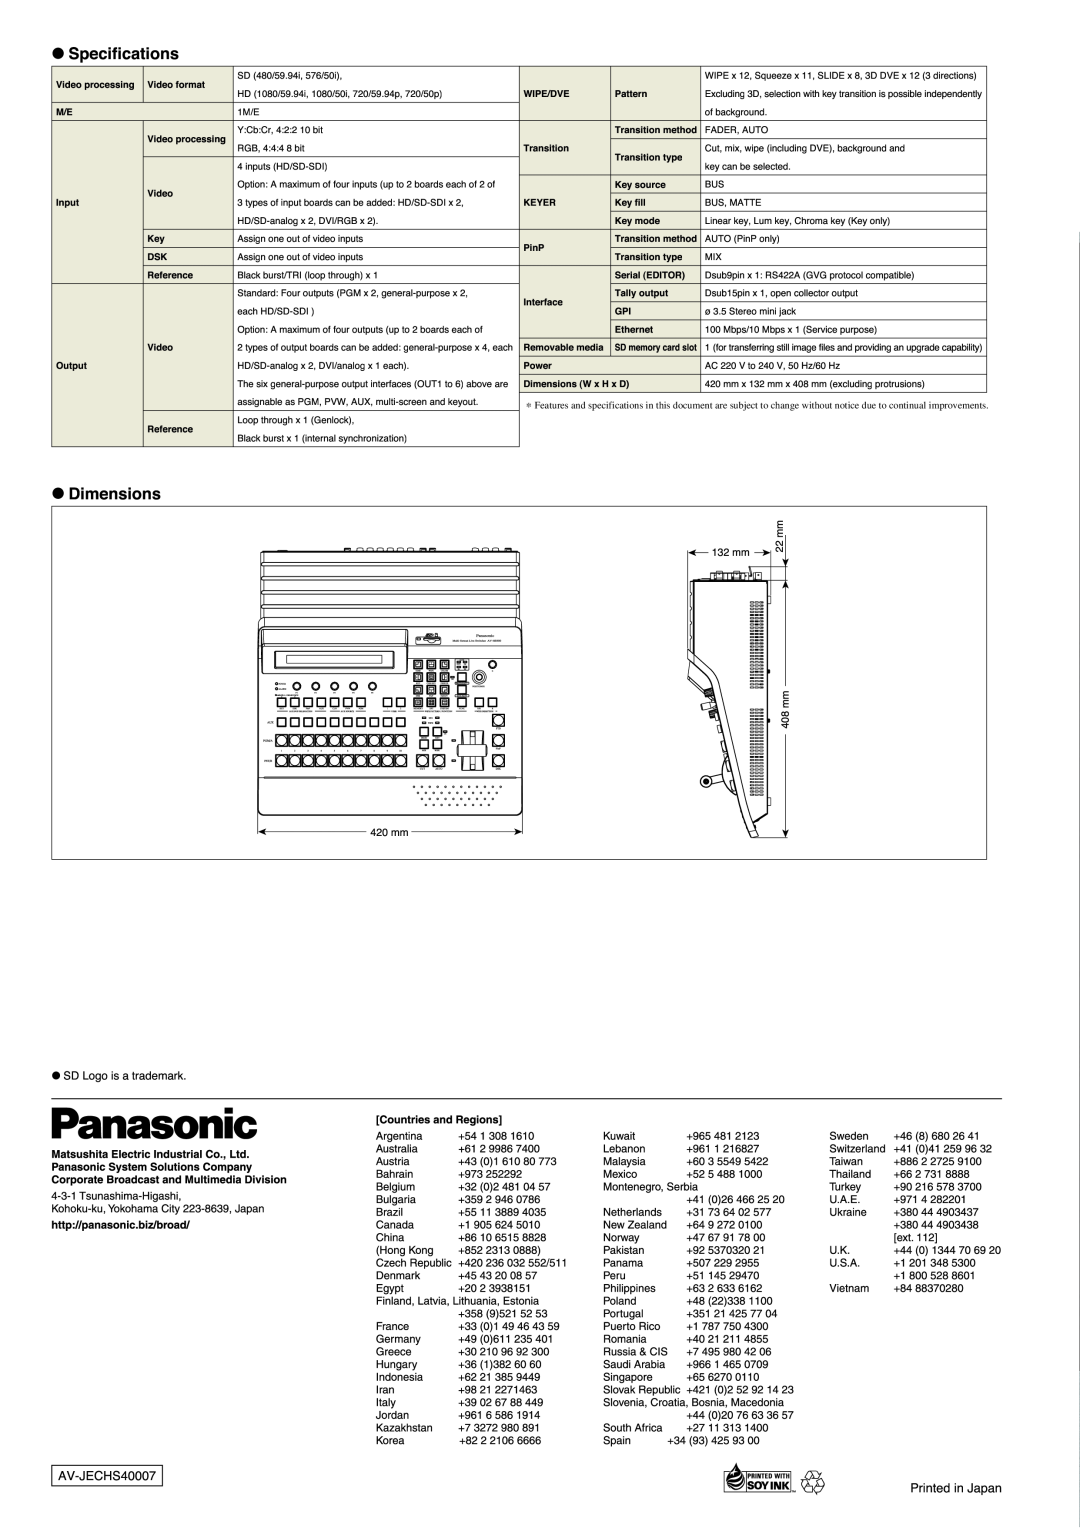 Panasonic AV-HS400 1M/E, Bus,Matte, ofbackground, RGB,4448bit, Fader,Auto, AUTOPinPonly, mm22, eachHD/SD-SDI, Video 